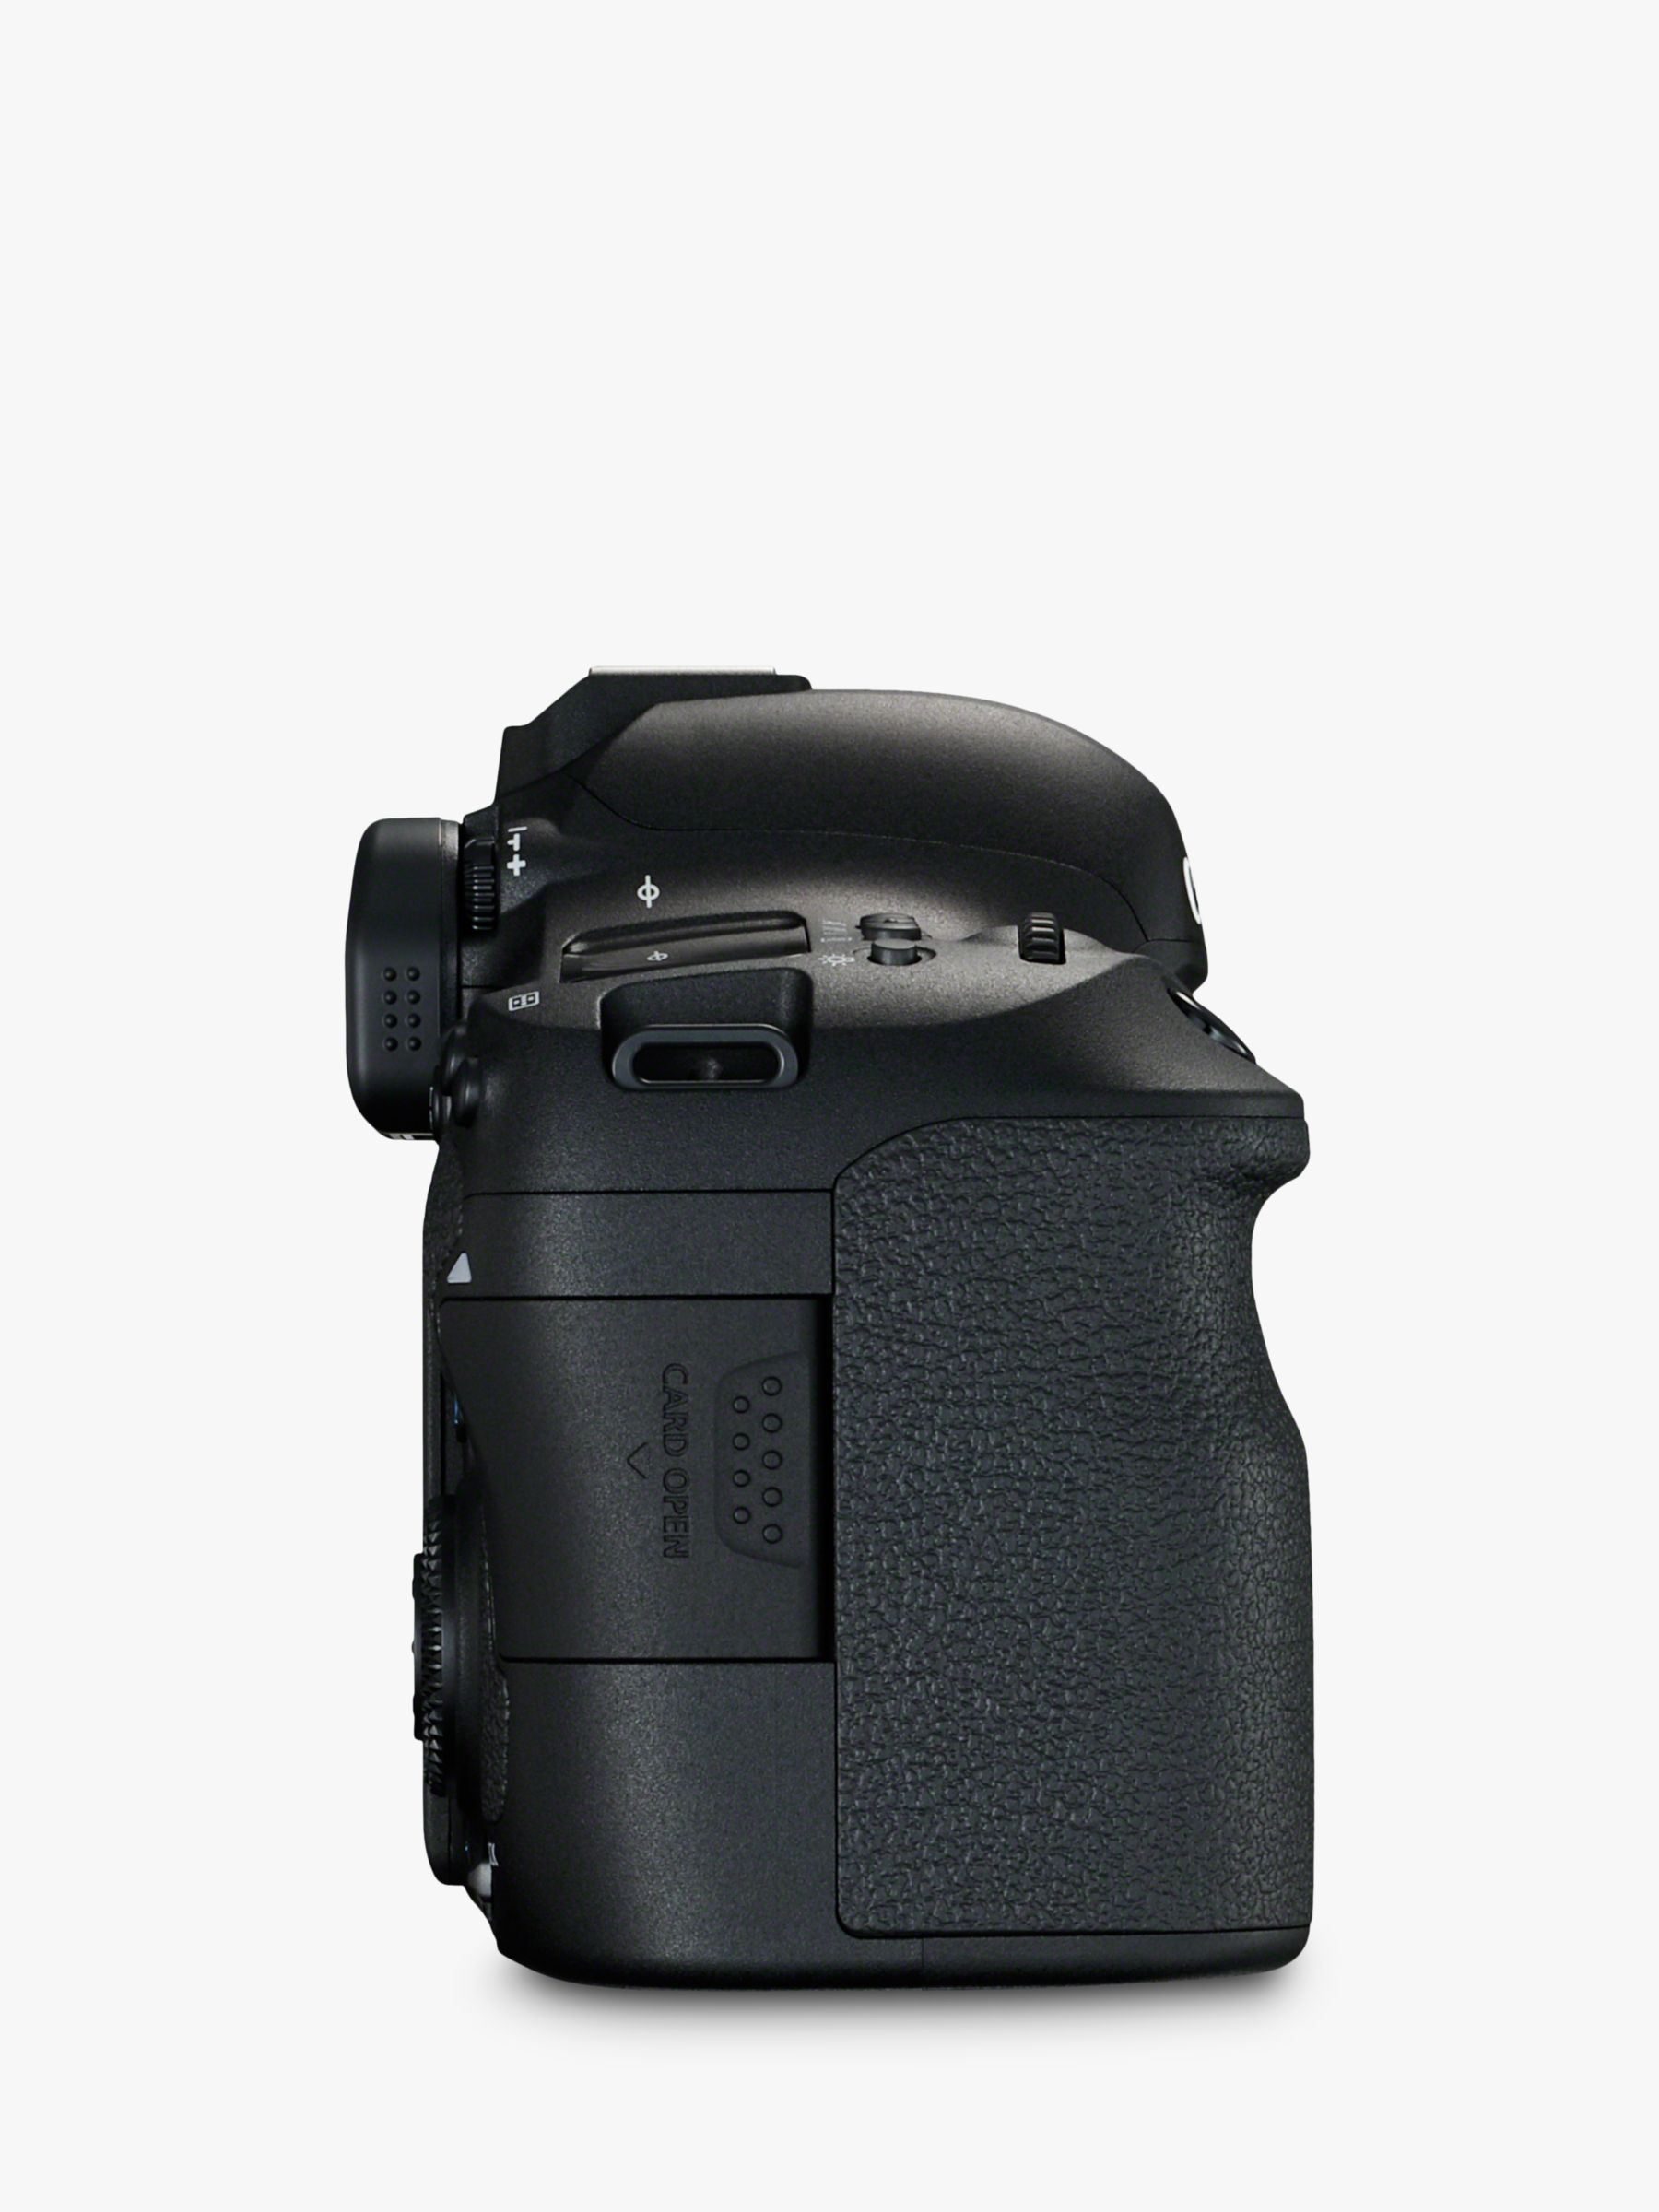 Telegraaf verraad water Canon EOS 6D MK II Digital SLR Camera, GPS, 1080p Full HD, 26.2MP, Wi-Fi,